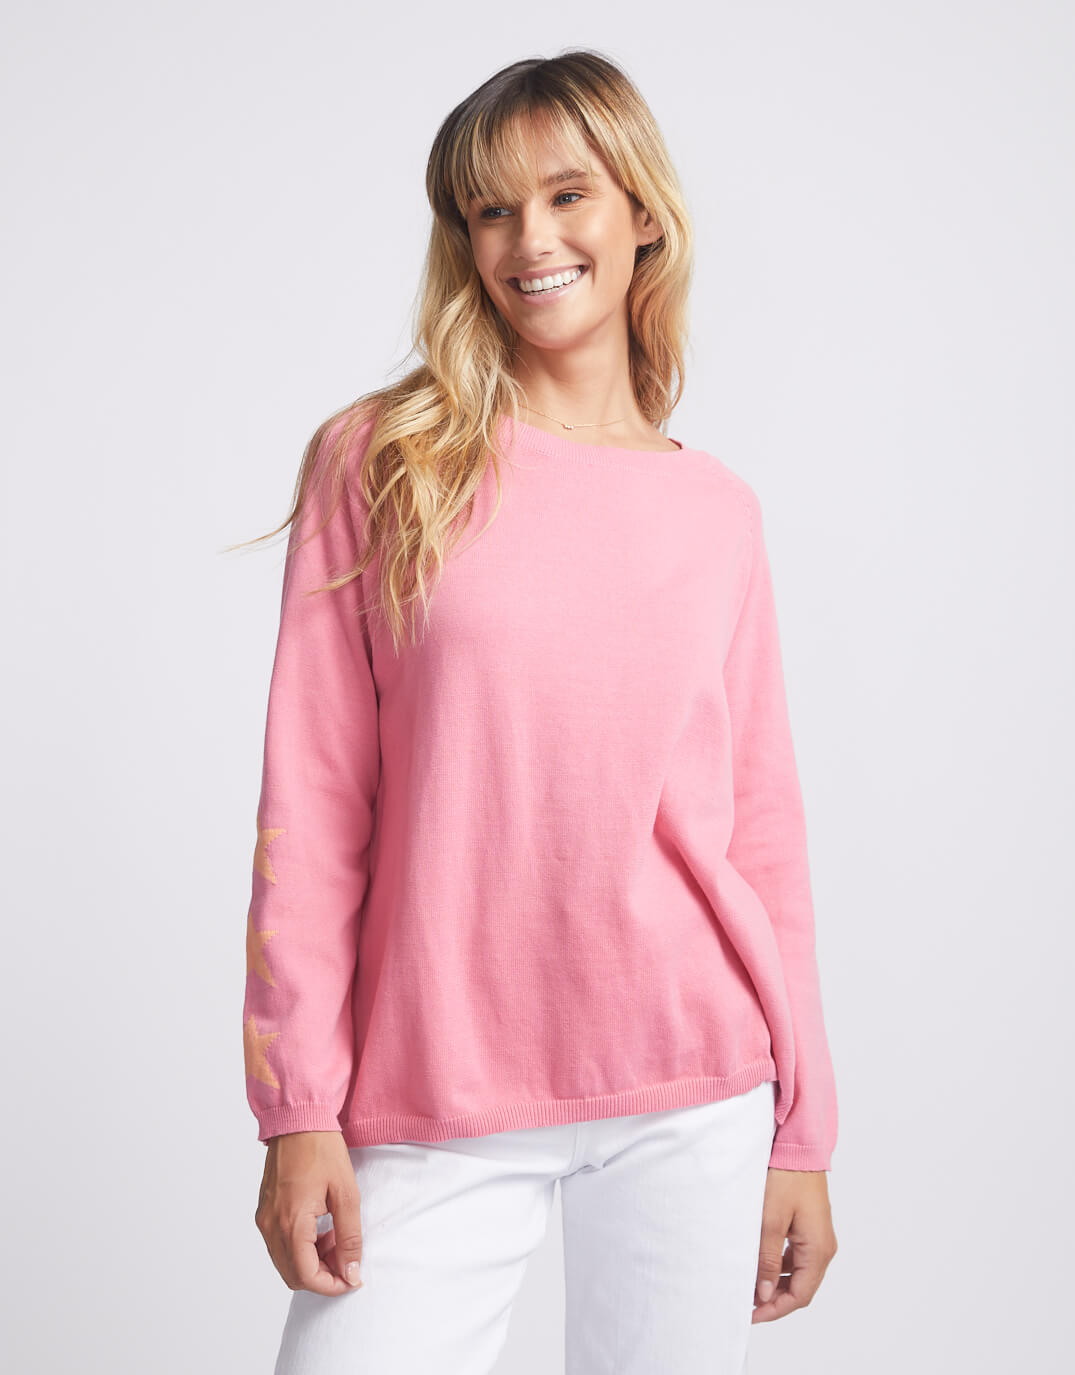 haven-weekender-knit-star-jumper-pink-sorbet-womens-clothing